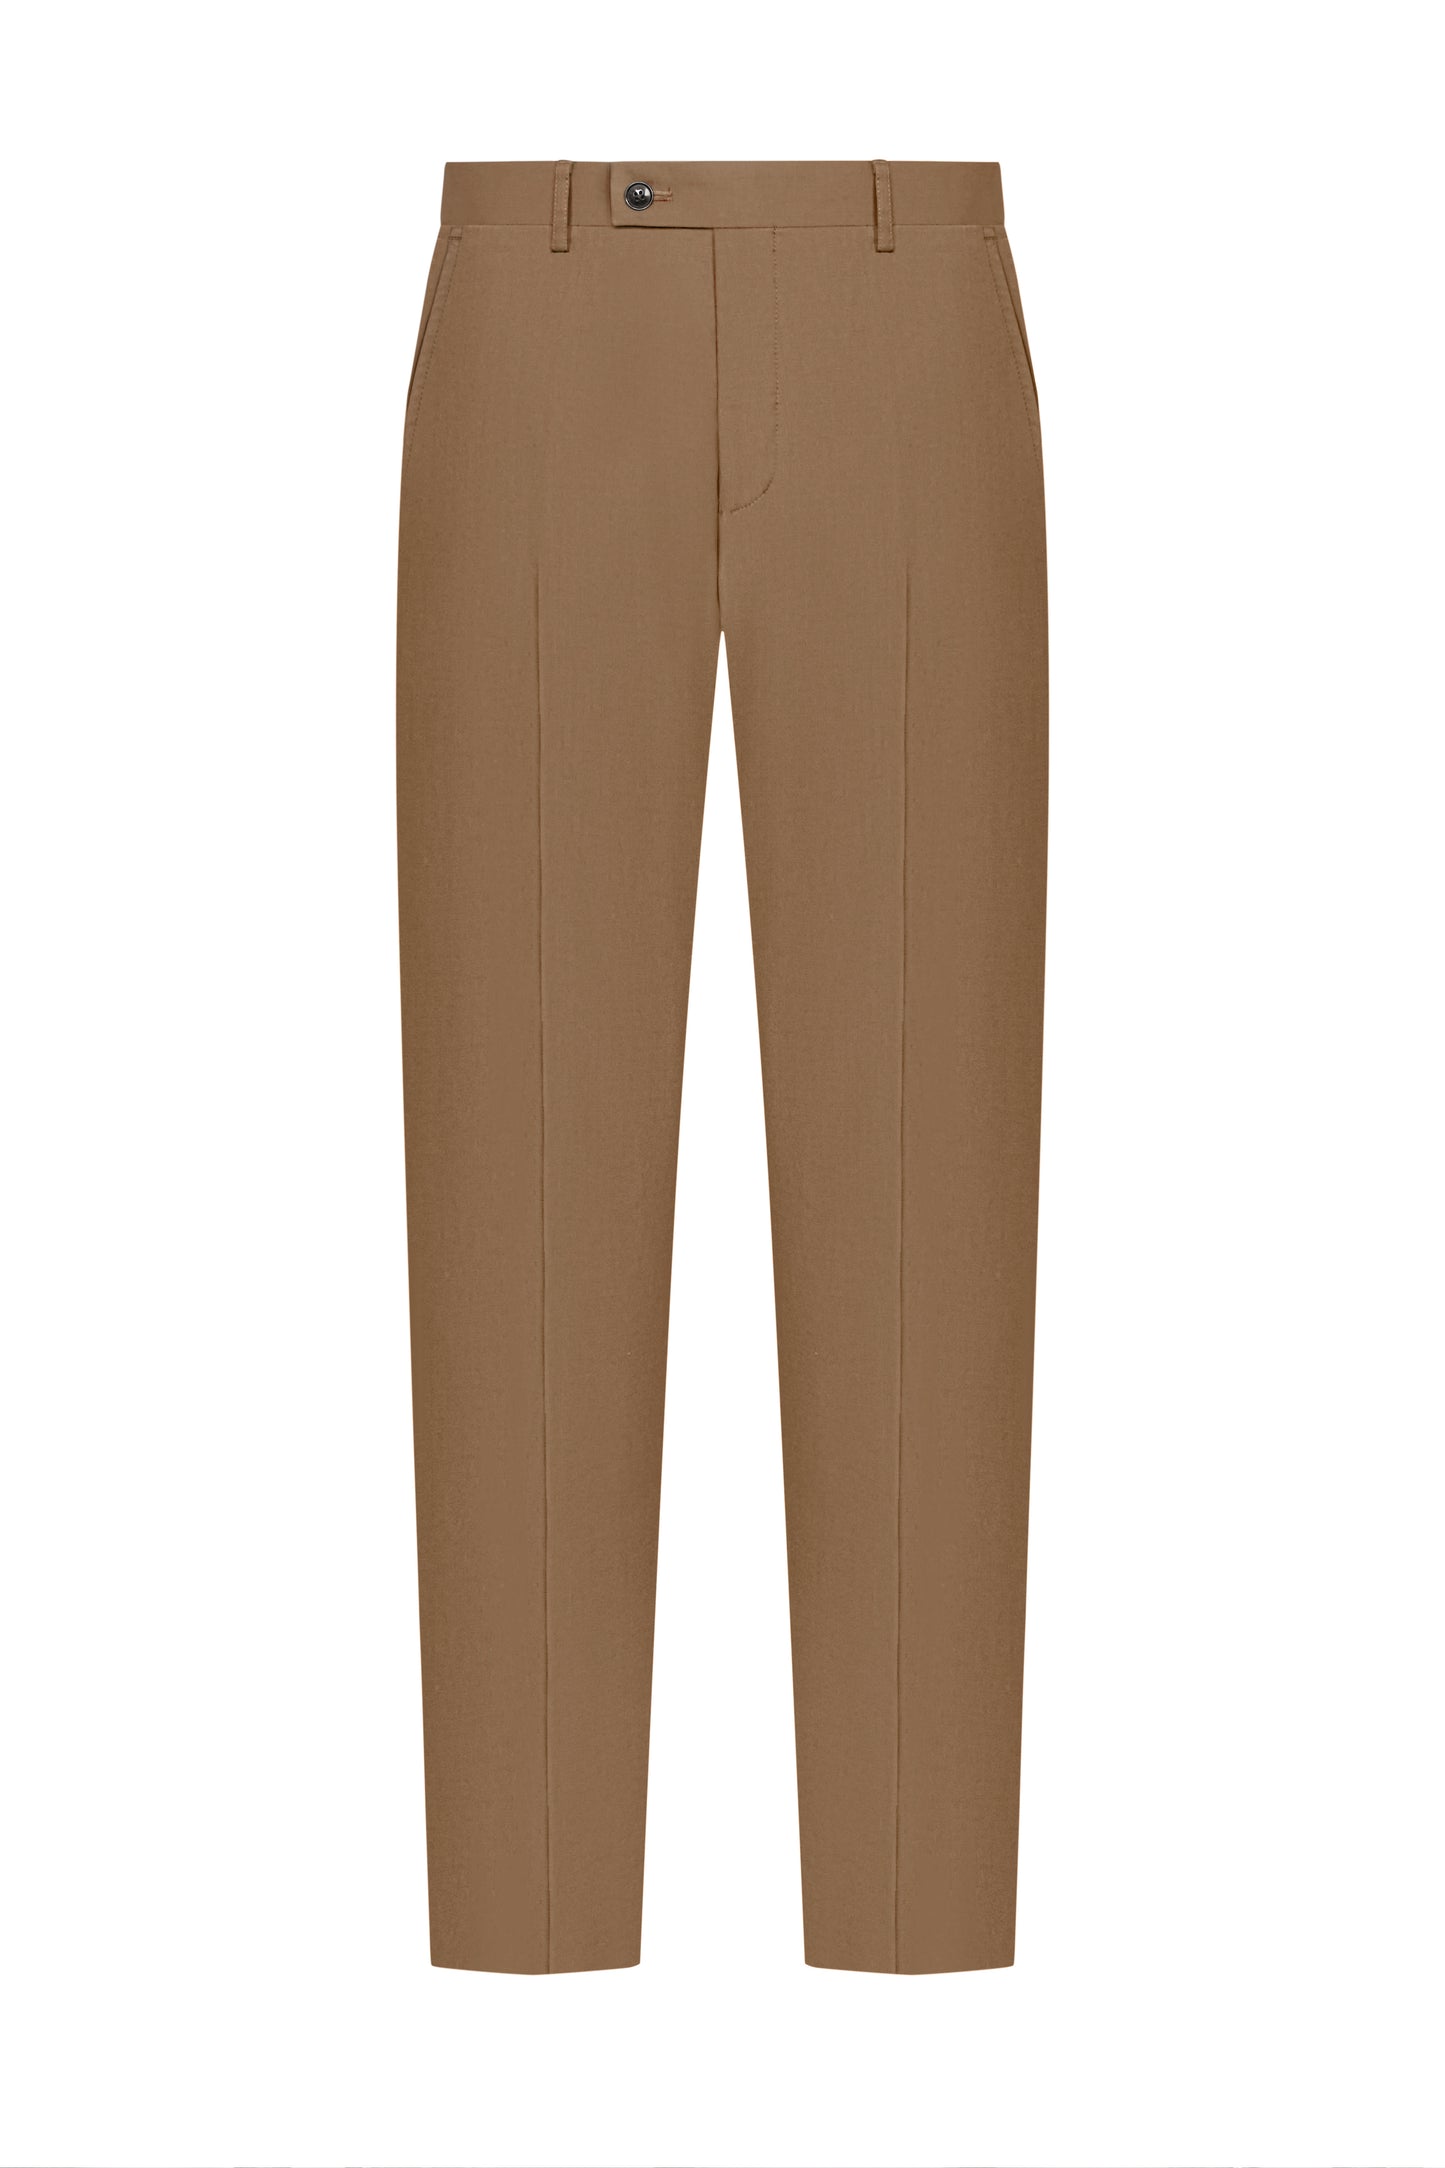 Holland & Sherry Dark Tan Twill Cotton Custom Trouser